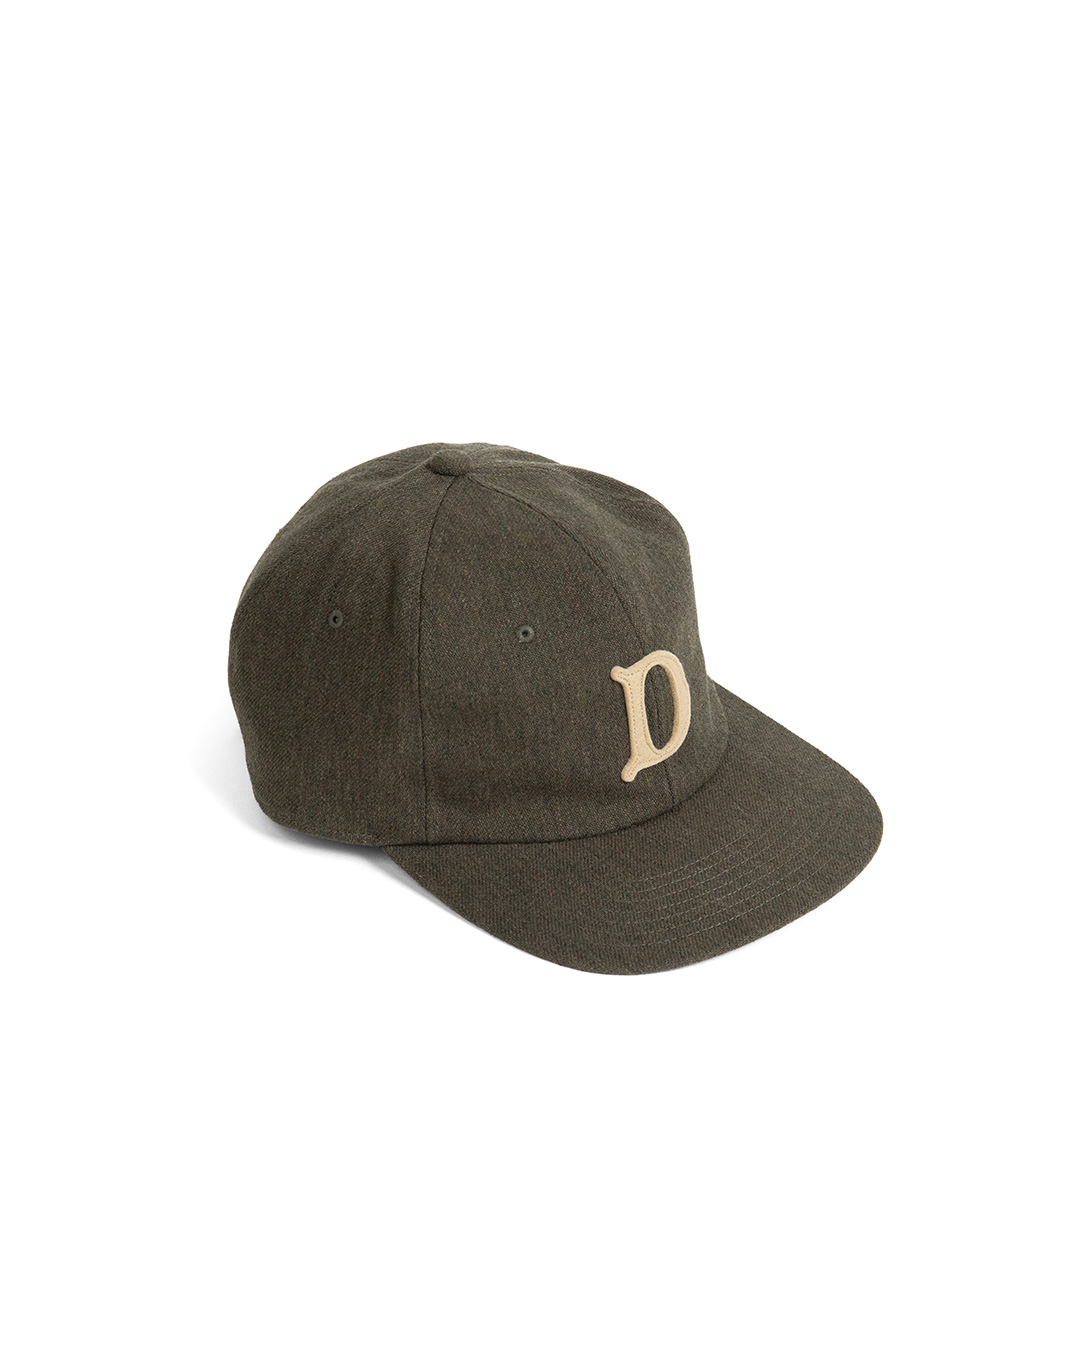 BASEBALL CAP (khaki)